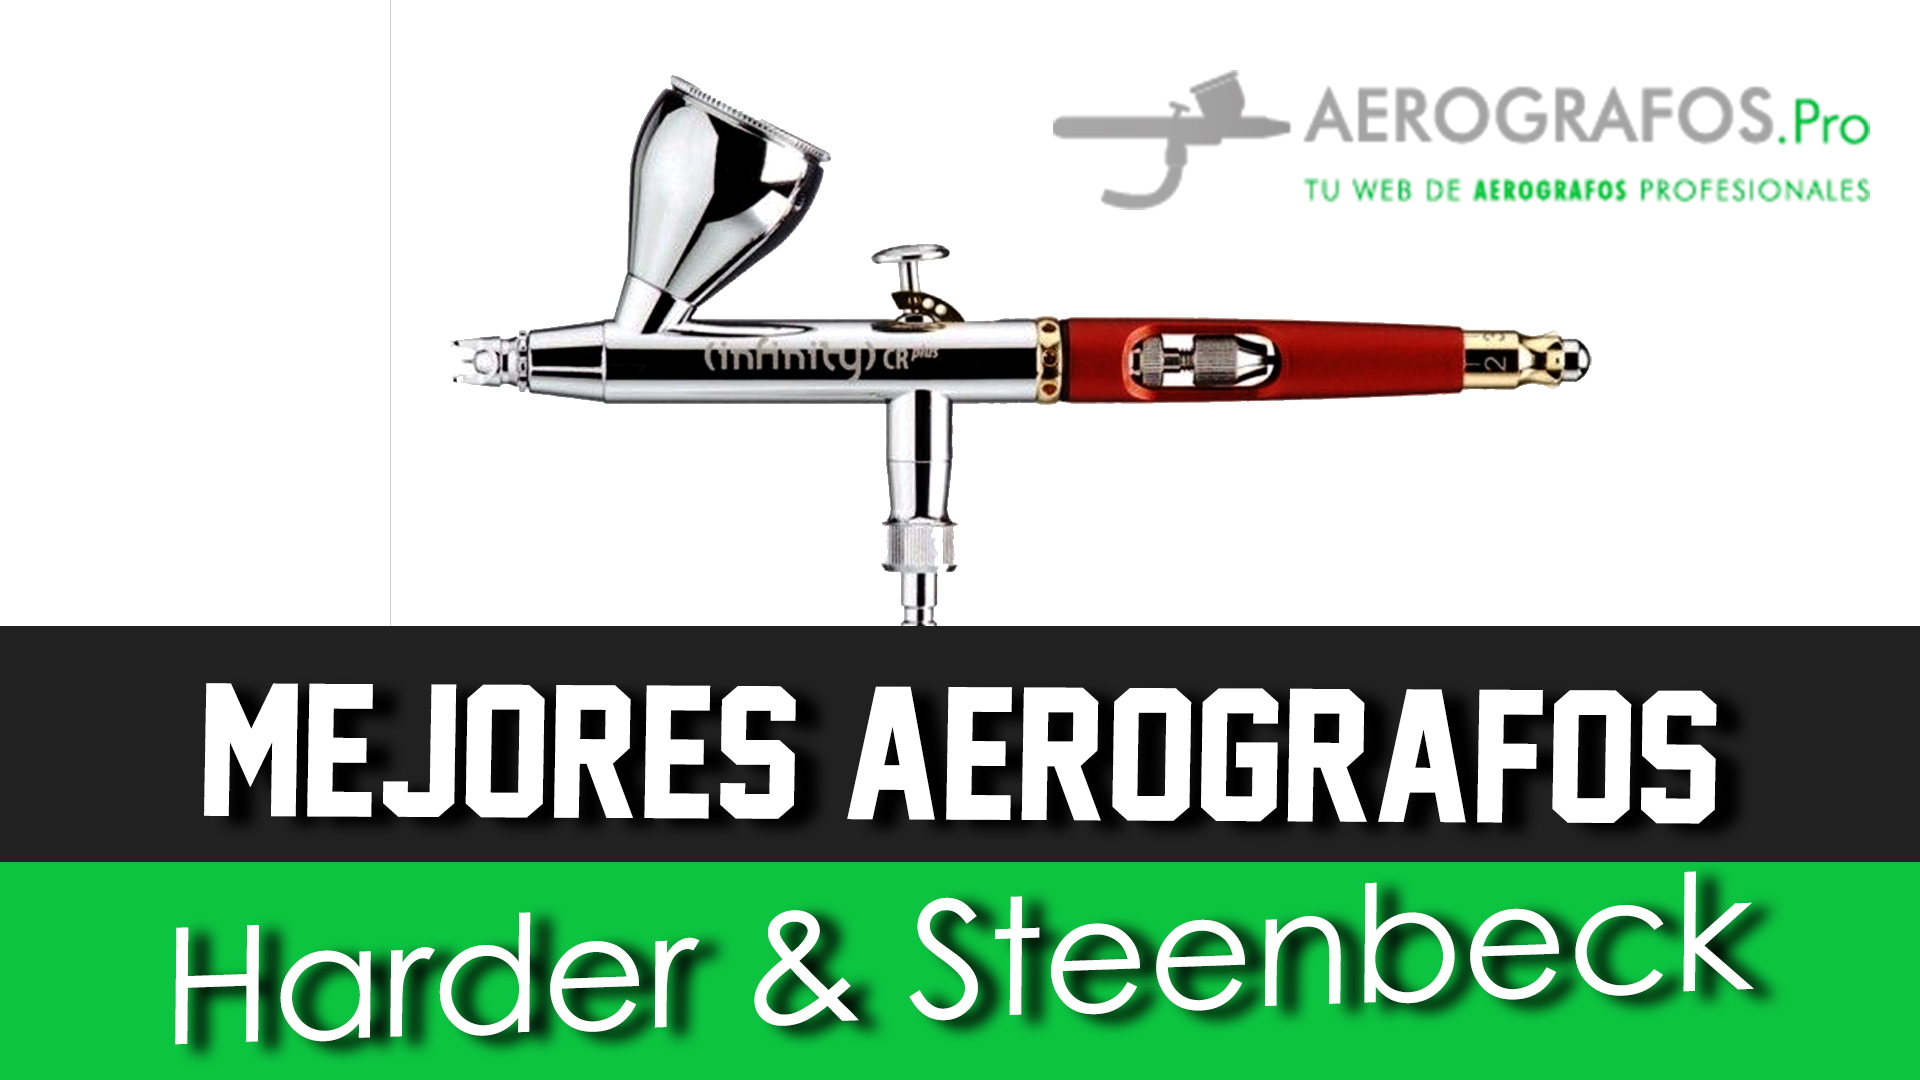 Aerografos Harder & Steenbeck